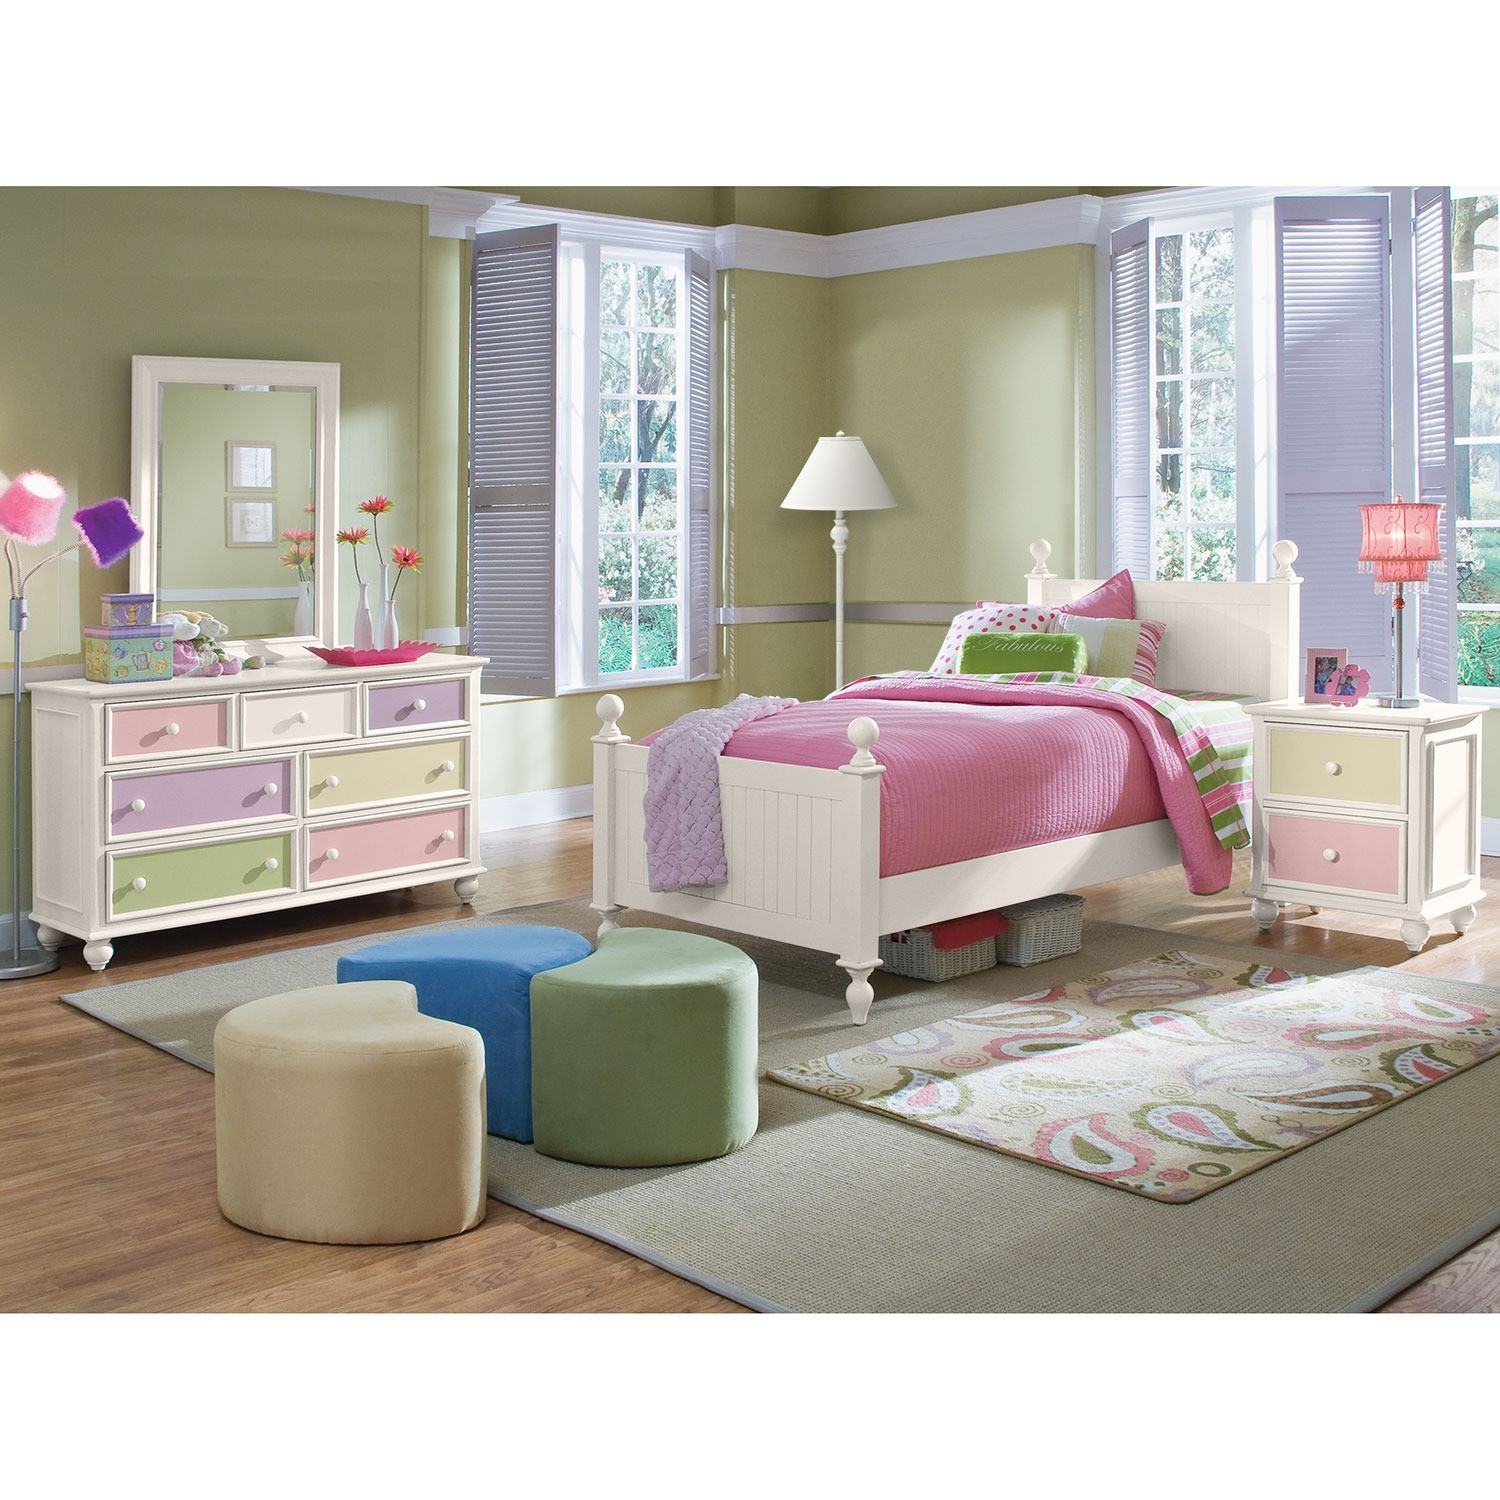 Kids White Bedroom Furniture
 Colorworks 6 Piece Full Bedroom Set White